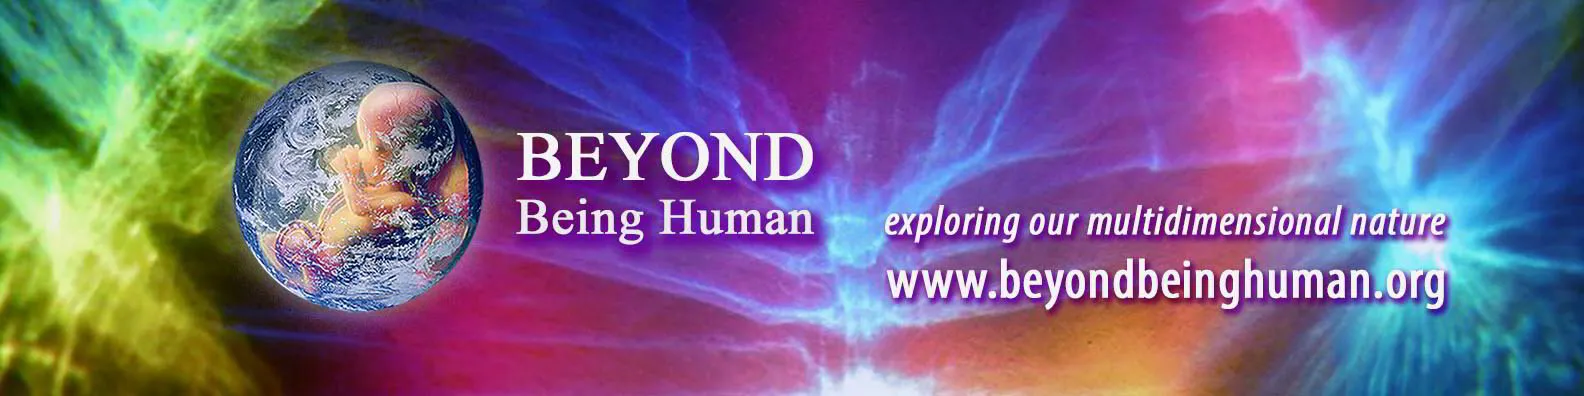 Beyond Being Human Banner